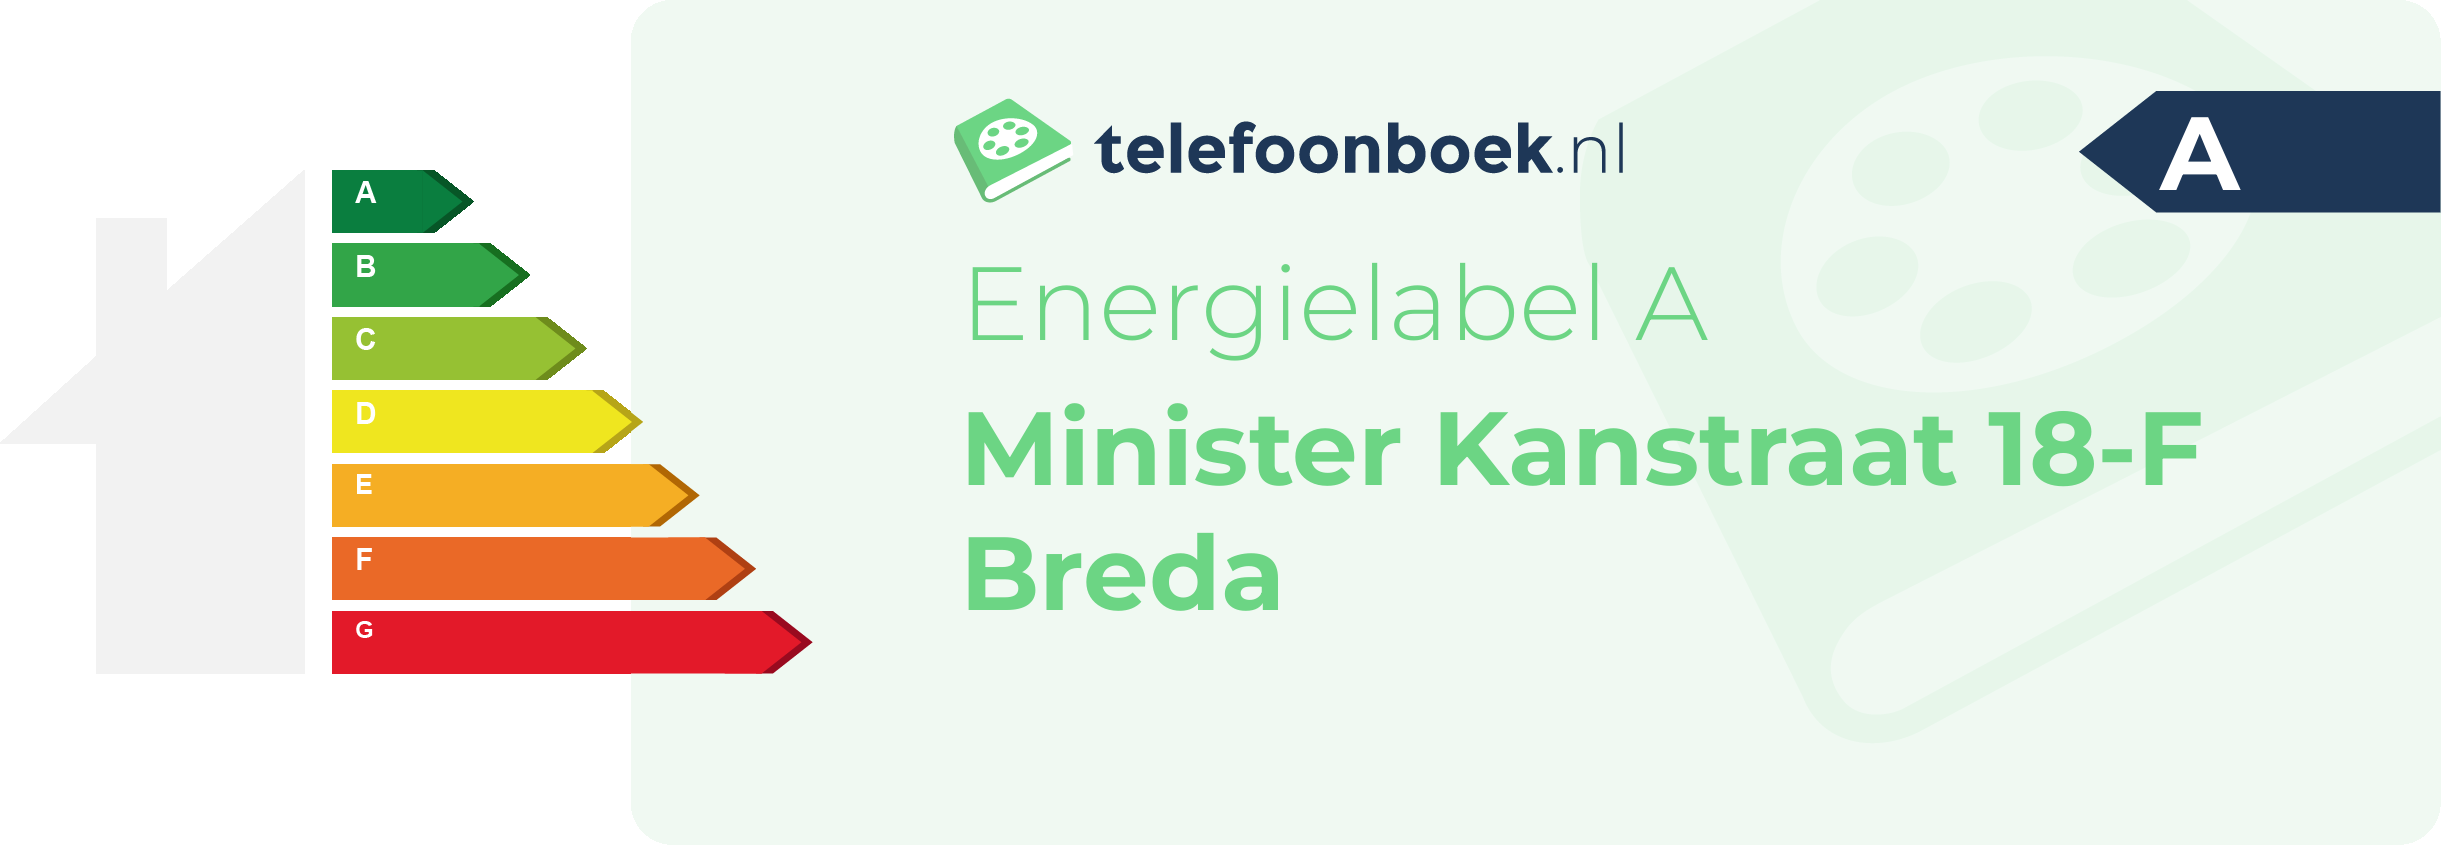 Energielabel Minister Kanstraat 18-F Breda